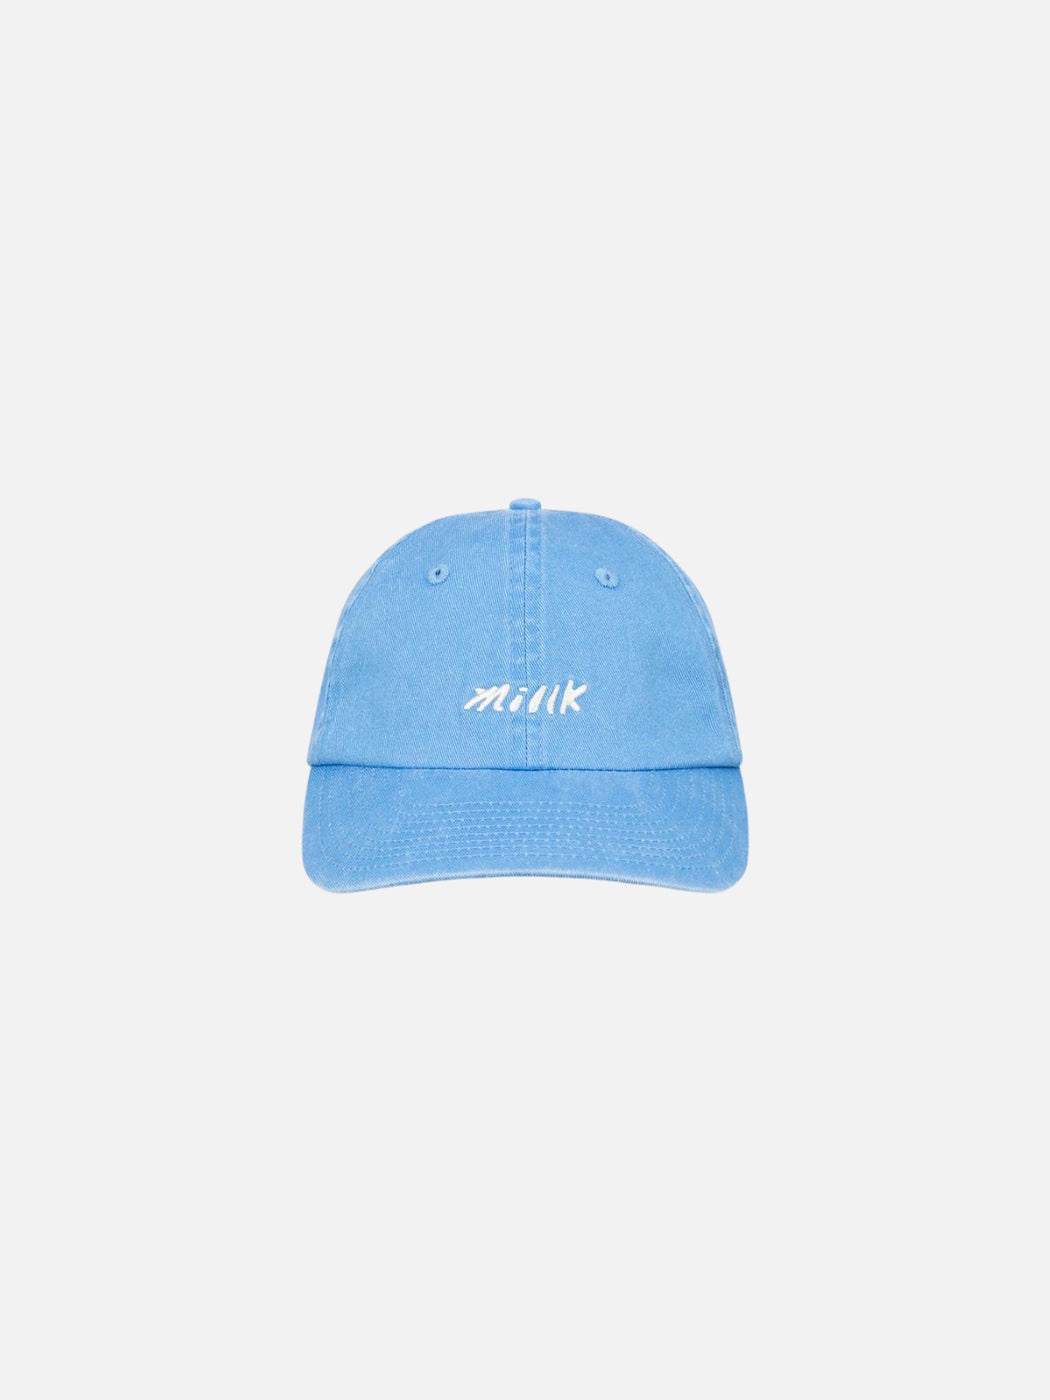 Millk Cap - Blue